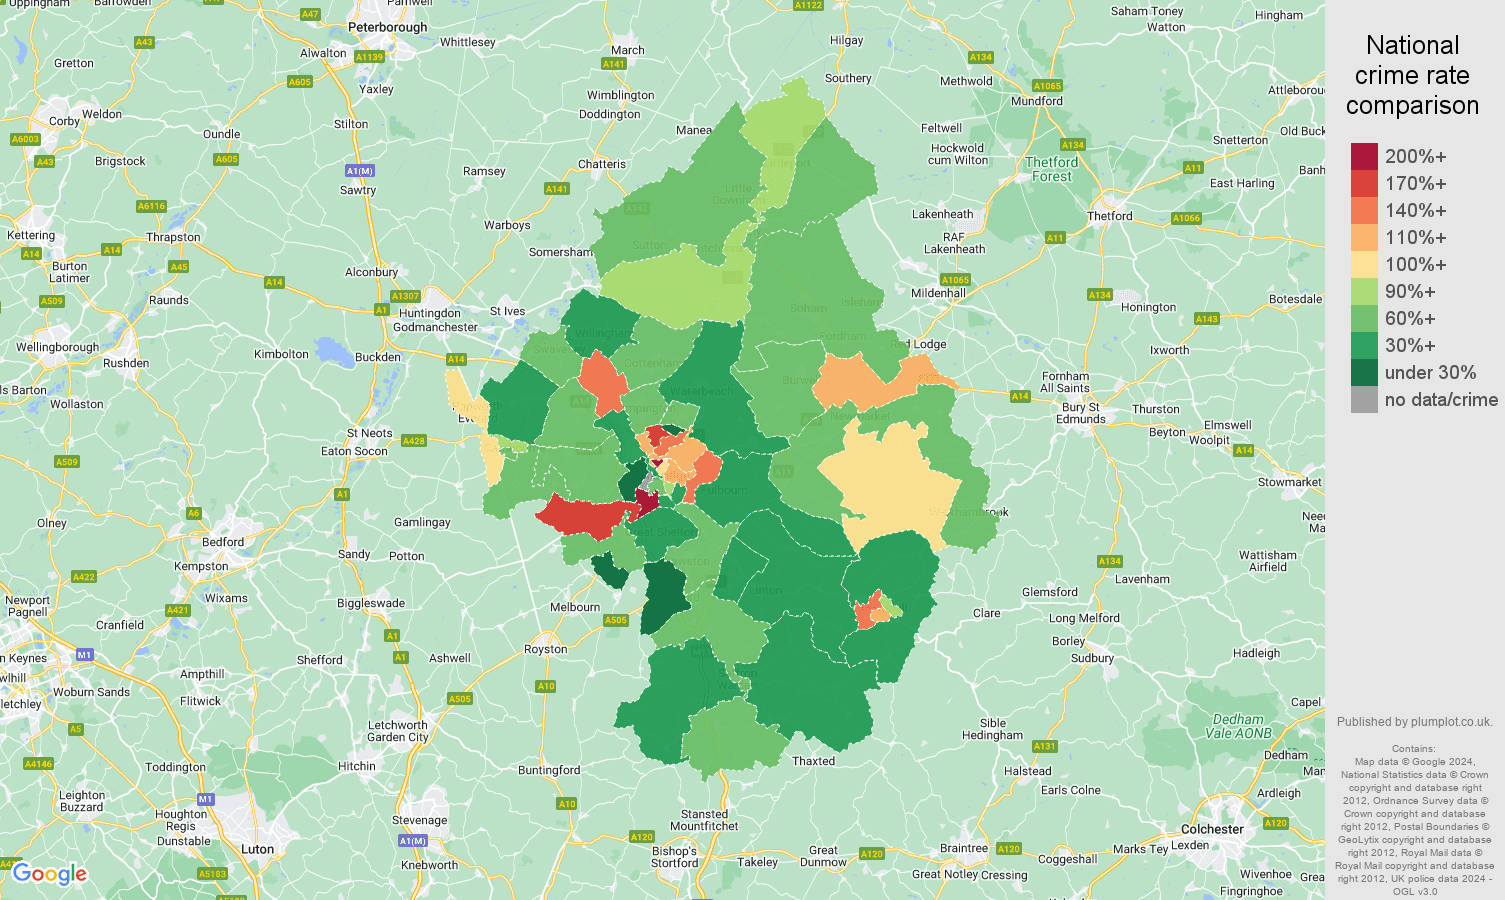 Cambridge criminal damage and arson crime rate comparison map